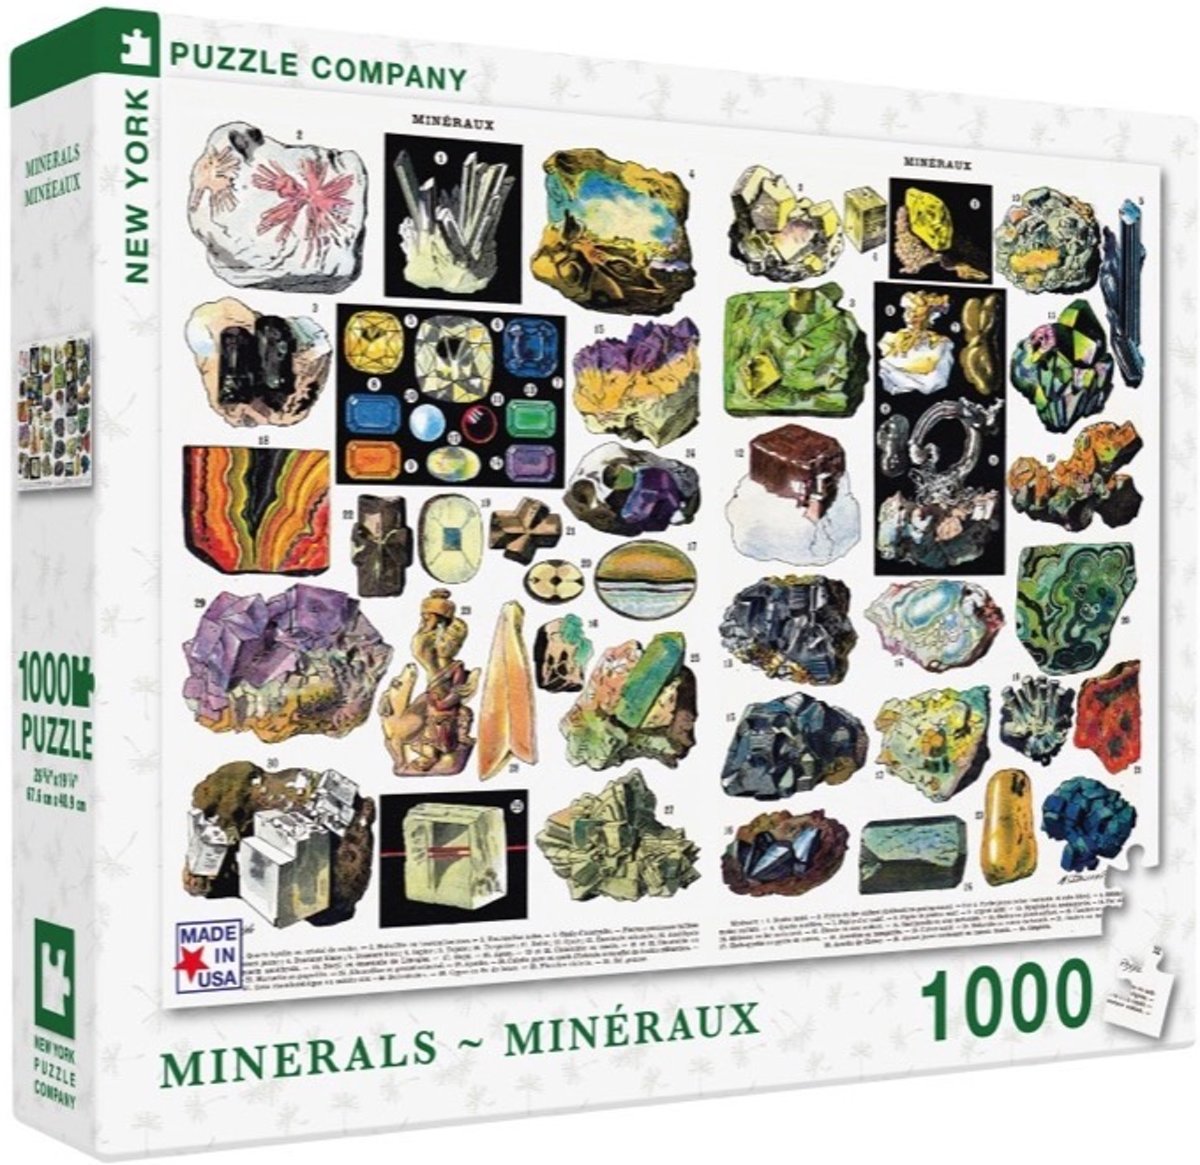 Minerals & Gems - NYPC Vintage Images Collectie Puzzel 1000 Stukjes